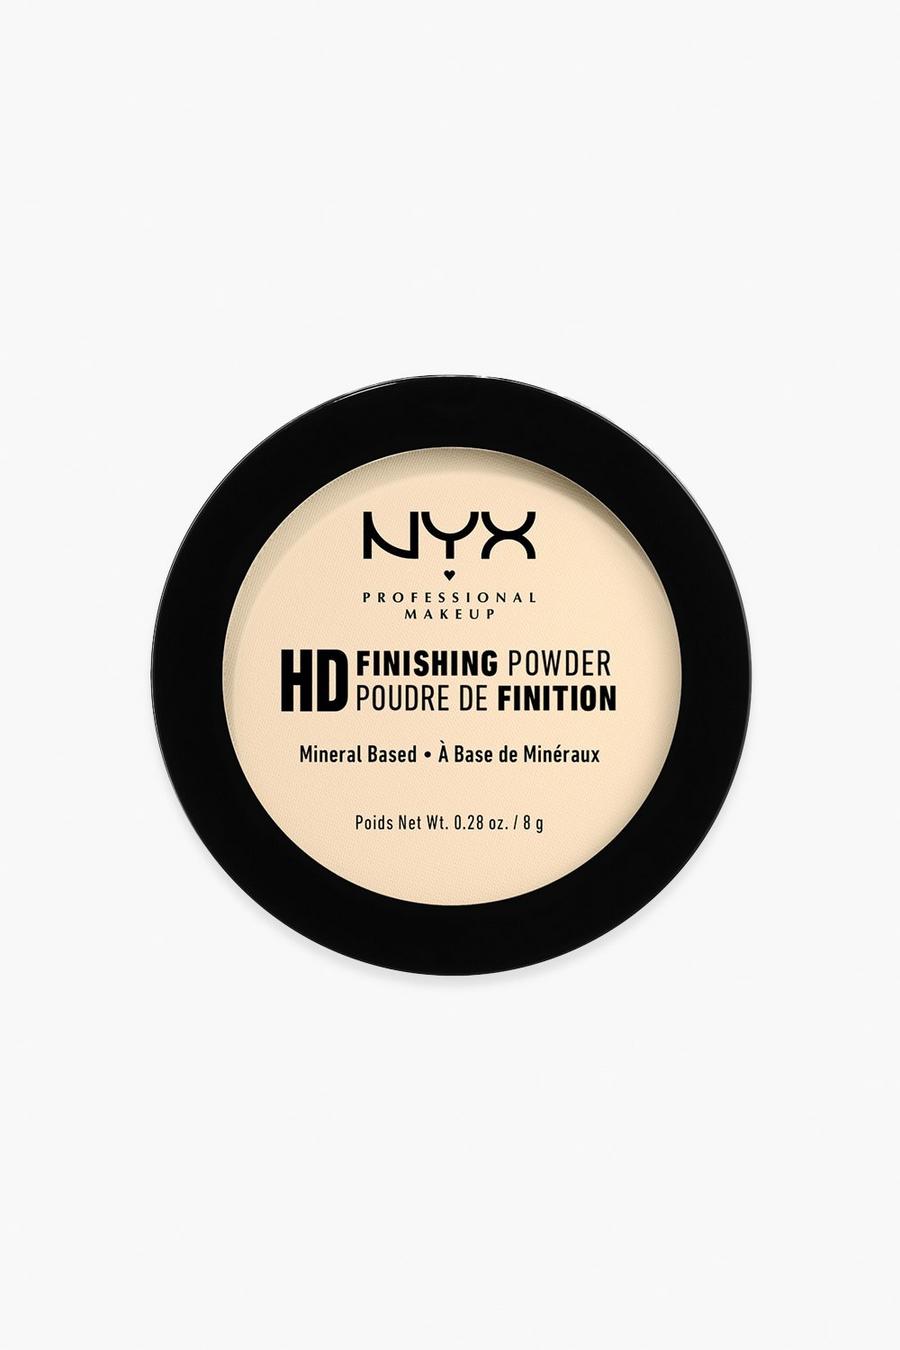 Polvos High Definition Finishing Powder de NYX Professional Makeup, 02 banana